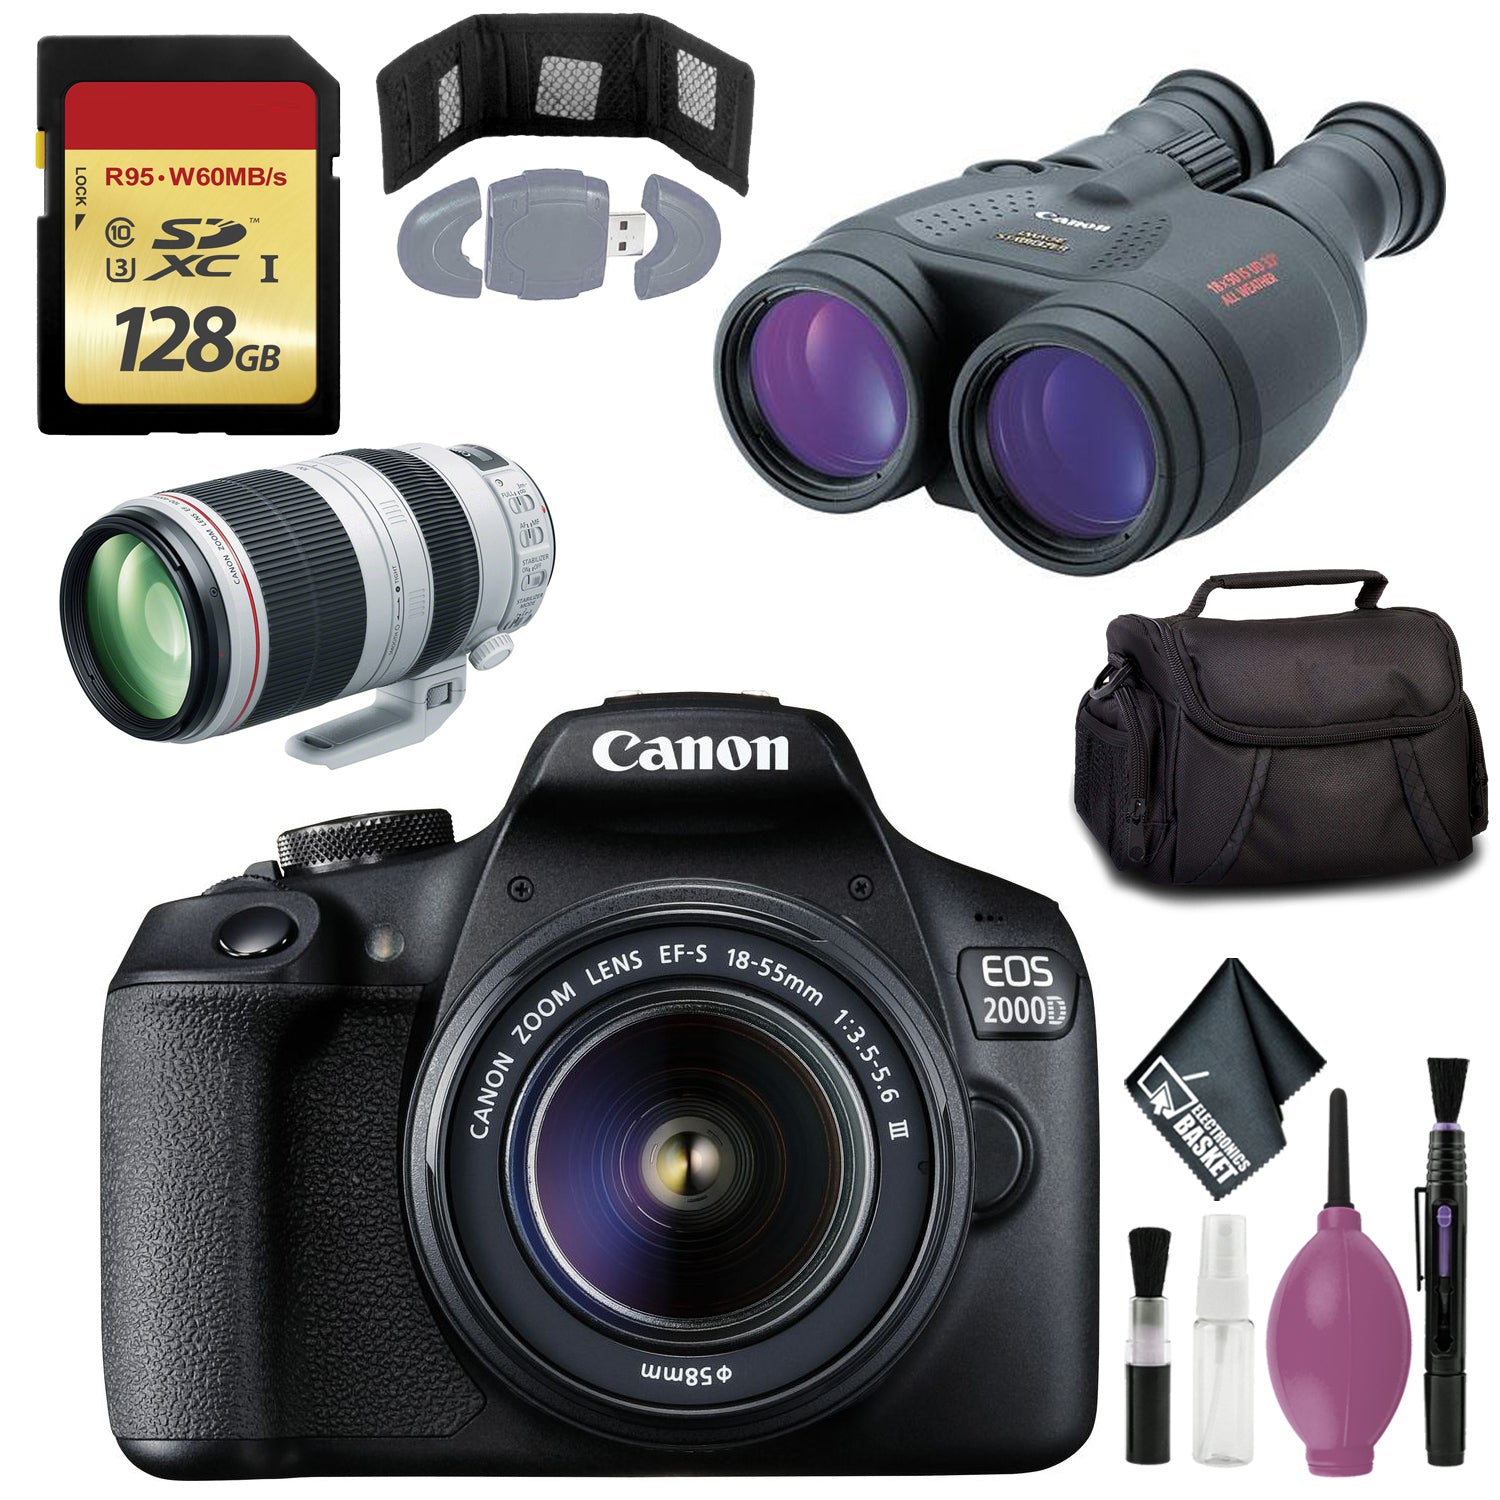 Canon 18x50 IS Image Stabilized Binocular - EOS 2000D Black + EF-S 18-55mm f/3.5-5.6 III Lens